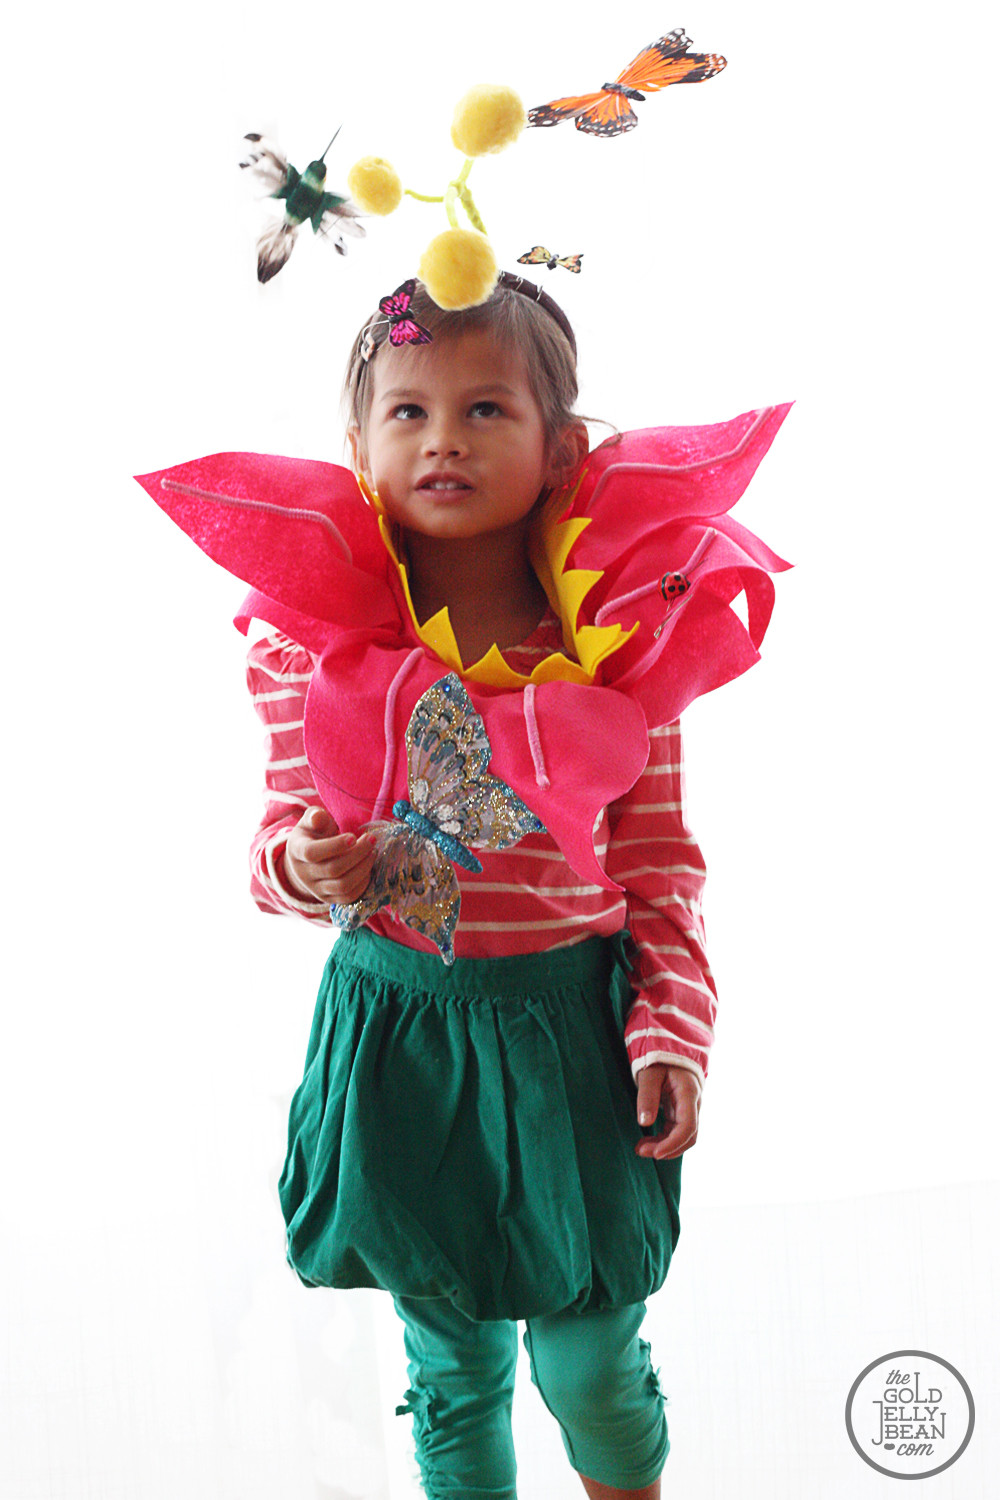 Best ideas about DIY Flower Costume
. Save or Pin DIY Halloween Costume Garden Flower Now.